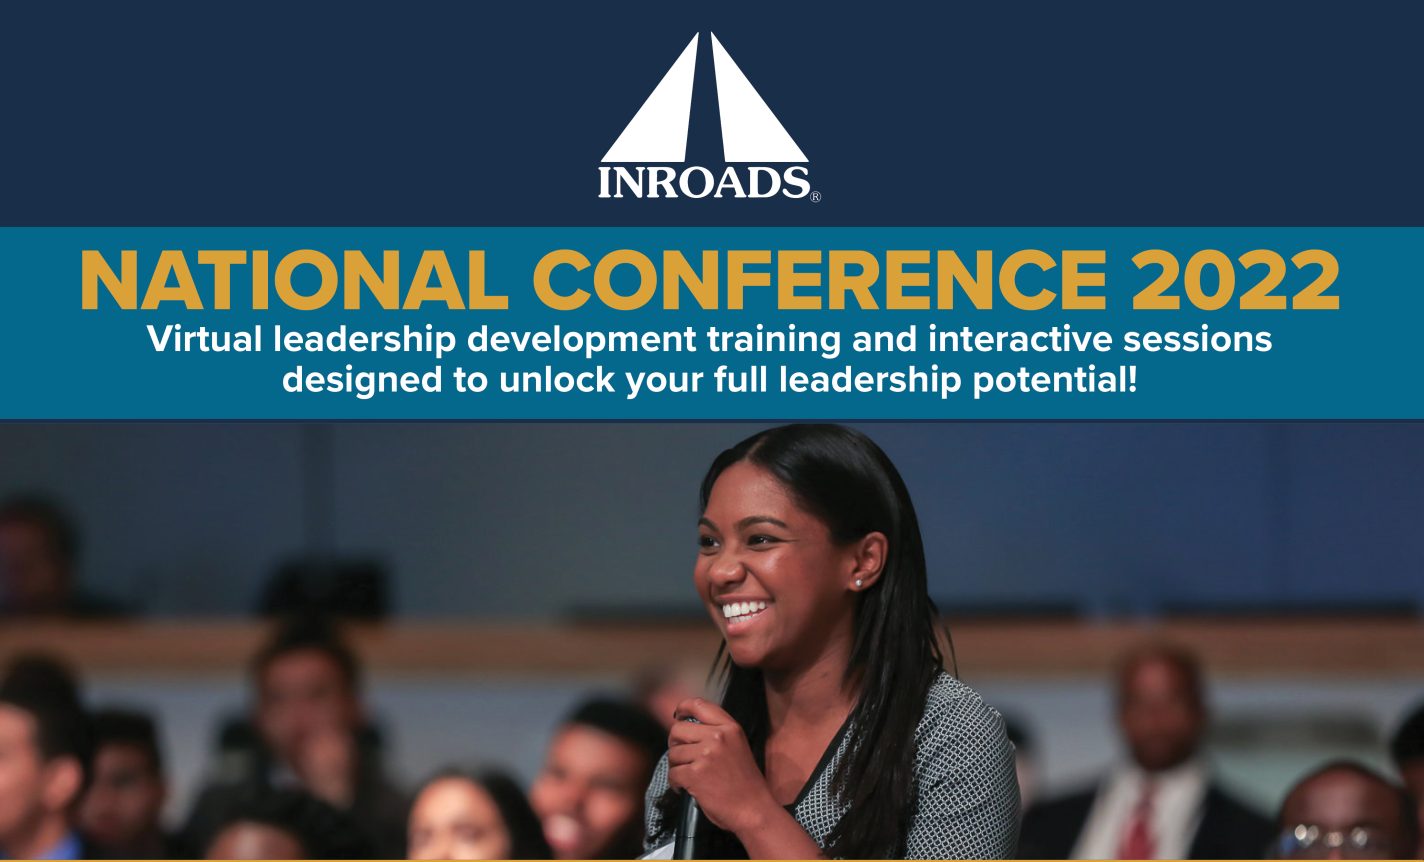 https://inroads.org/wp-content/uploads/2022/08/INROADS-l-INROADS-National-Conference_Draft-7_OP3-2-1424x862.jpg